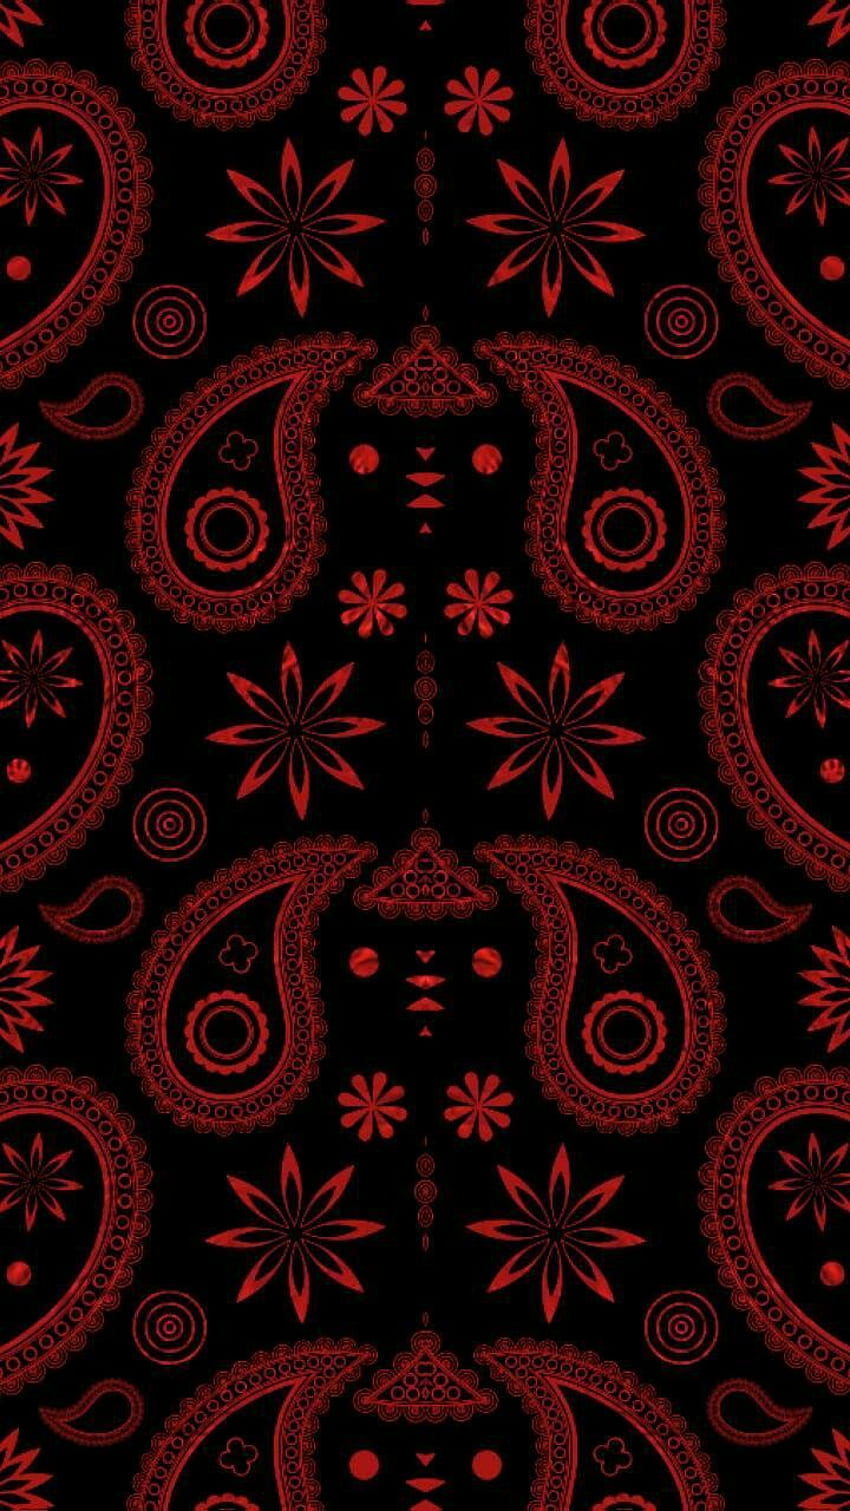 528 Red bandana background Vector Images  Depositphotos